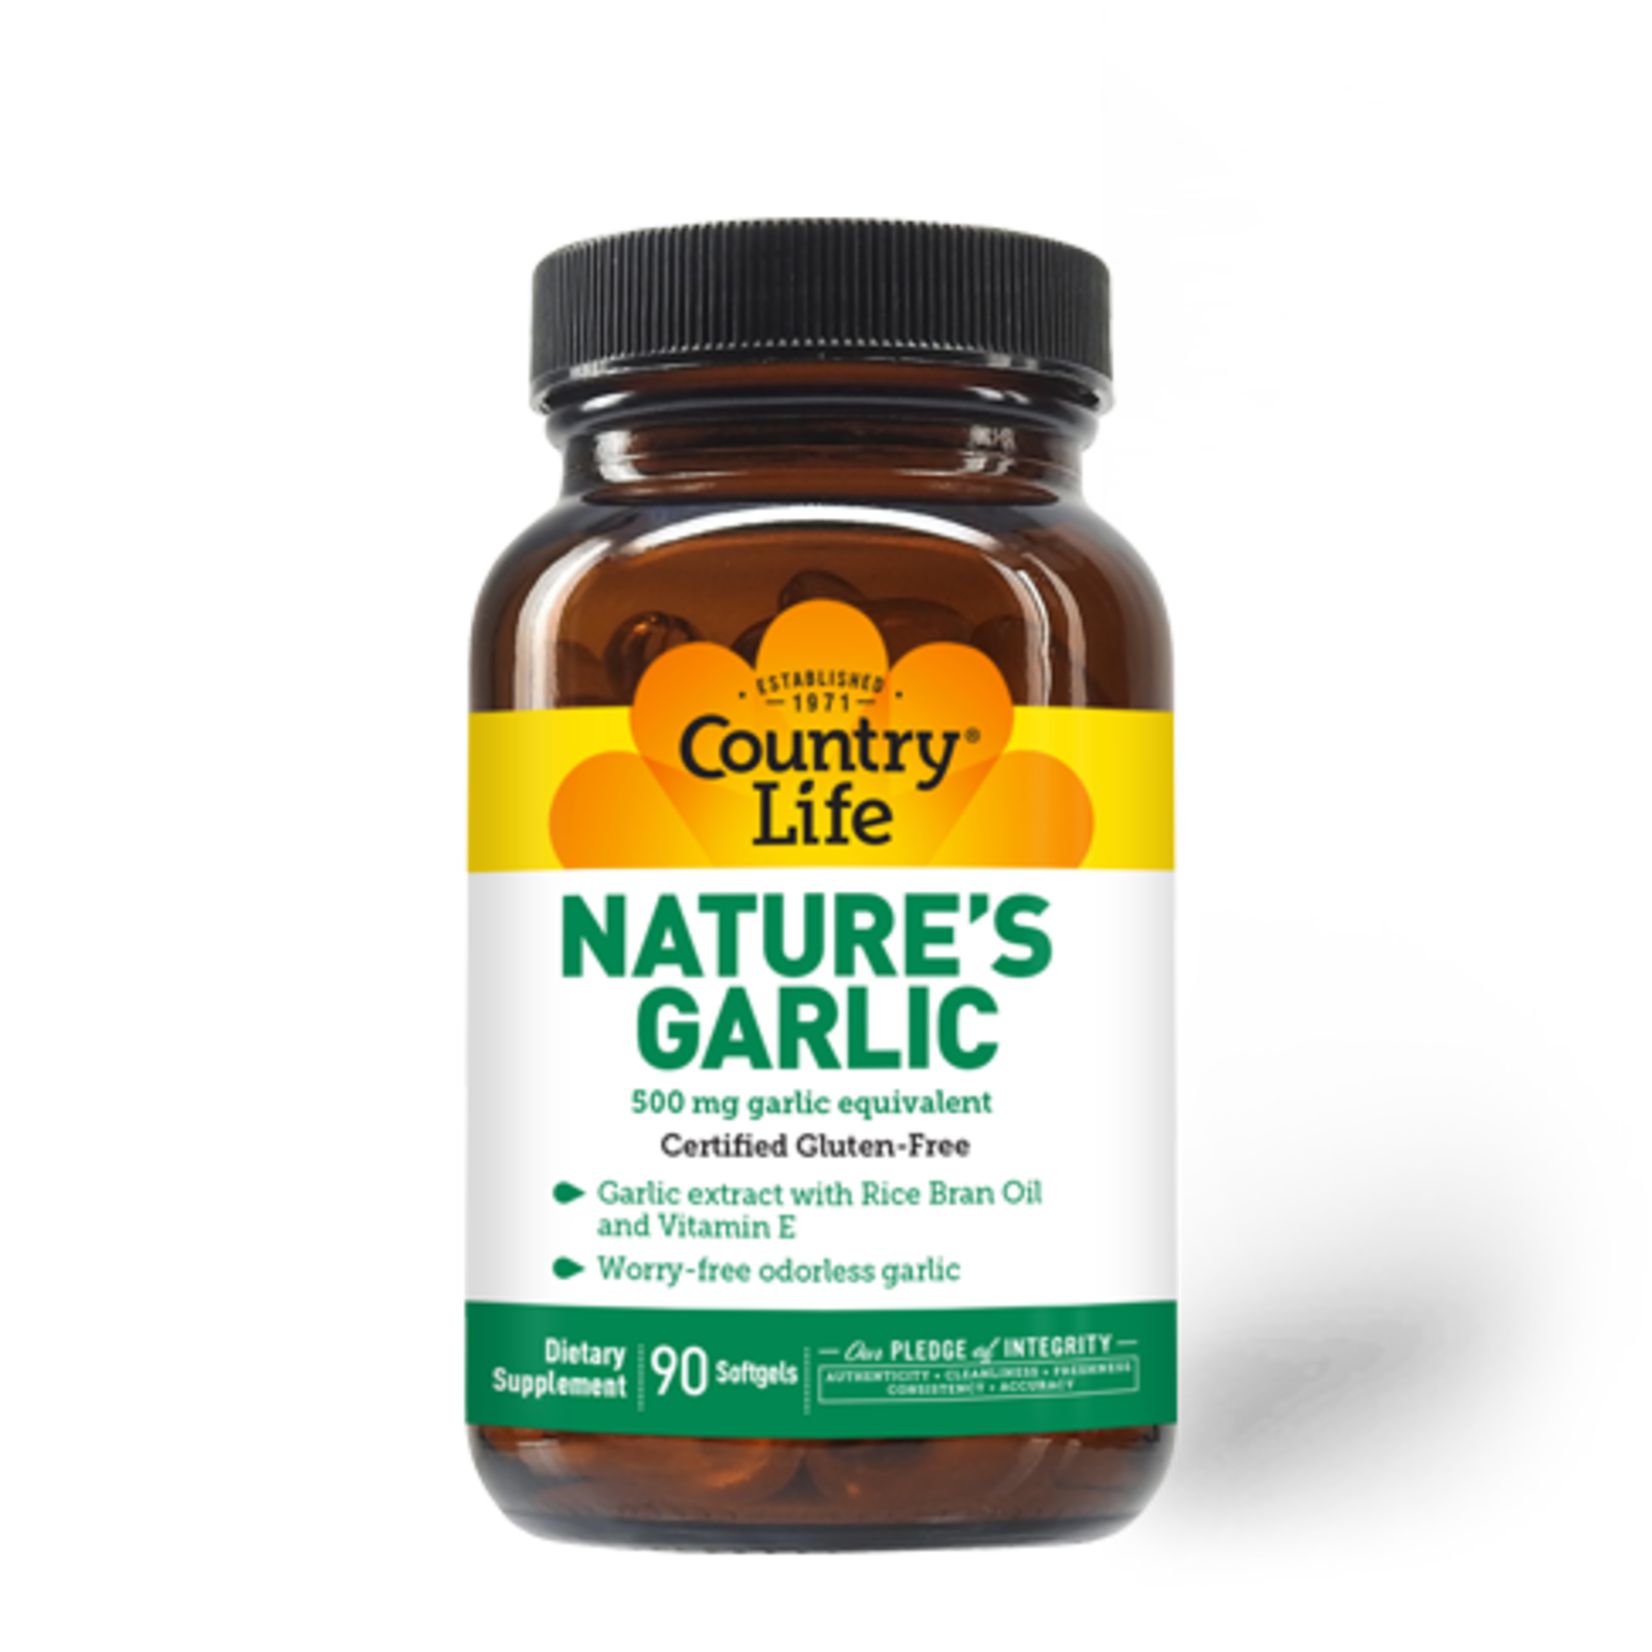 Country Life Country Life - Natures Garlic 500 mg - 90 Softgels